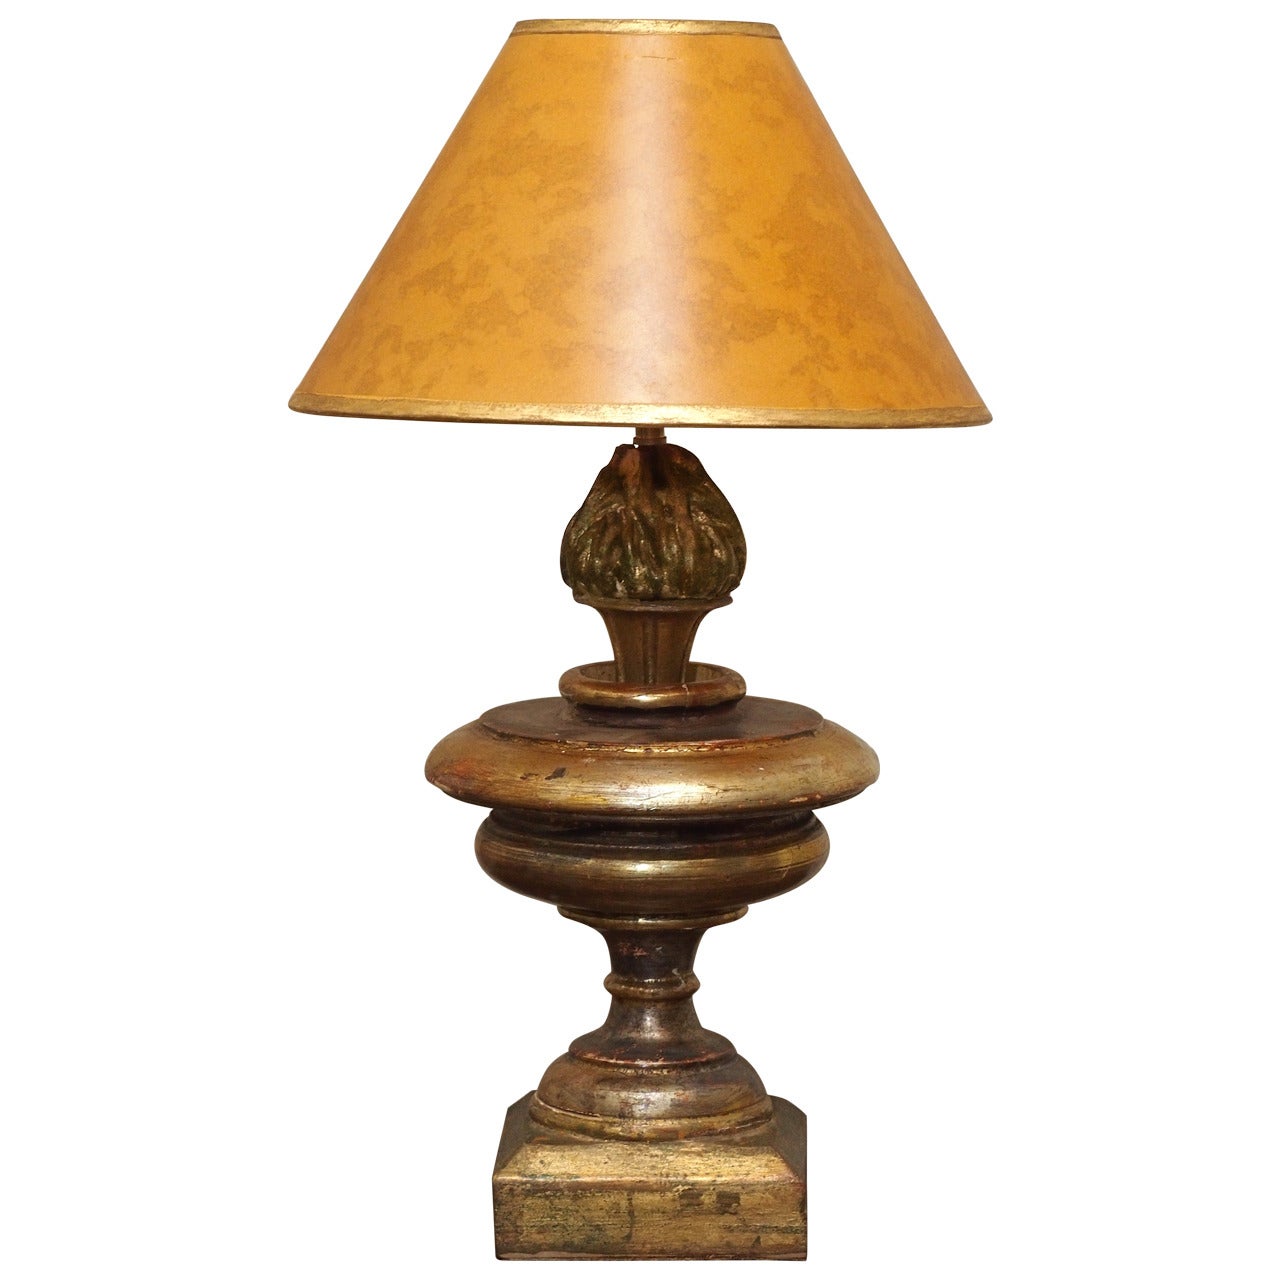 Single gilt wood lamp